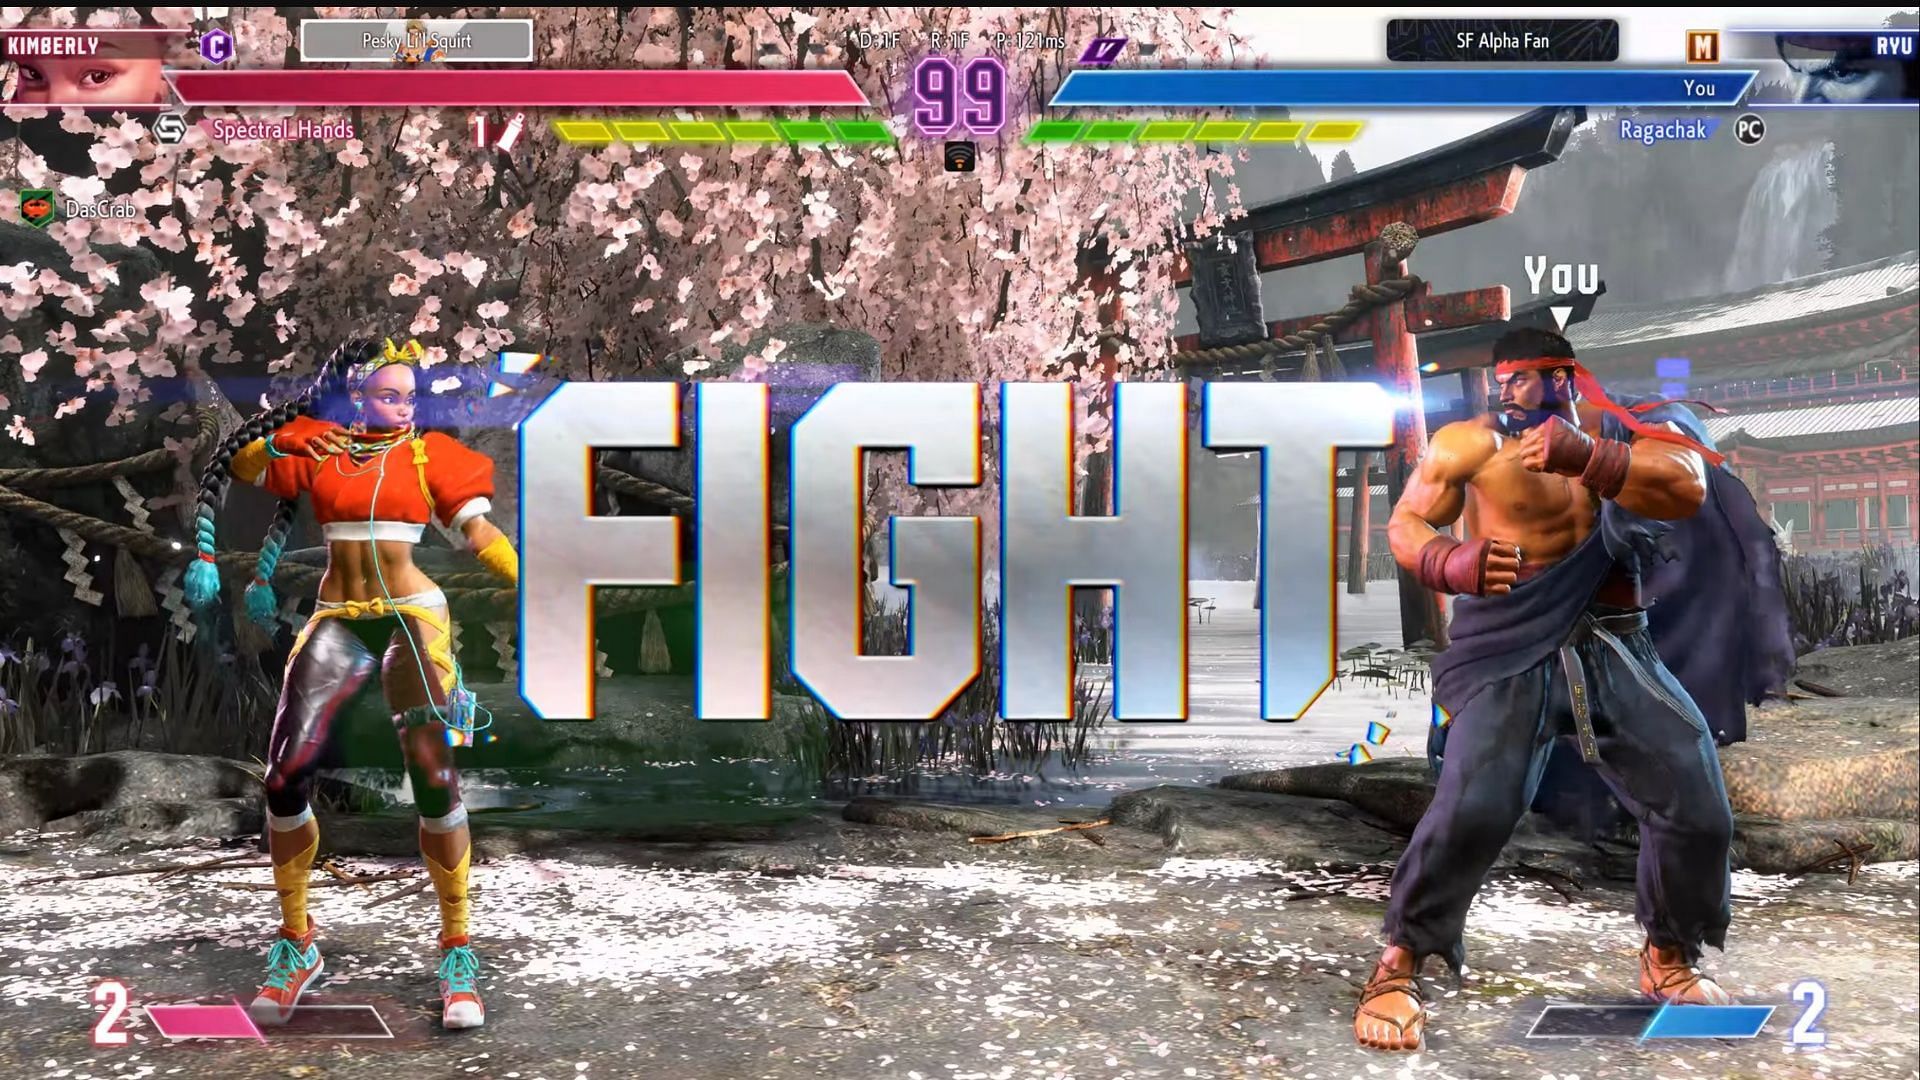 Análise - Street Fighter 6 - PlayStation 5 - REVIL